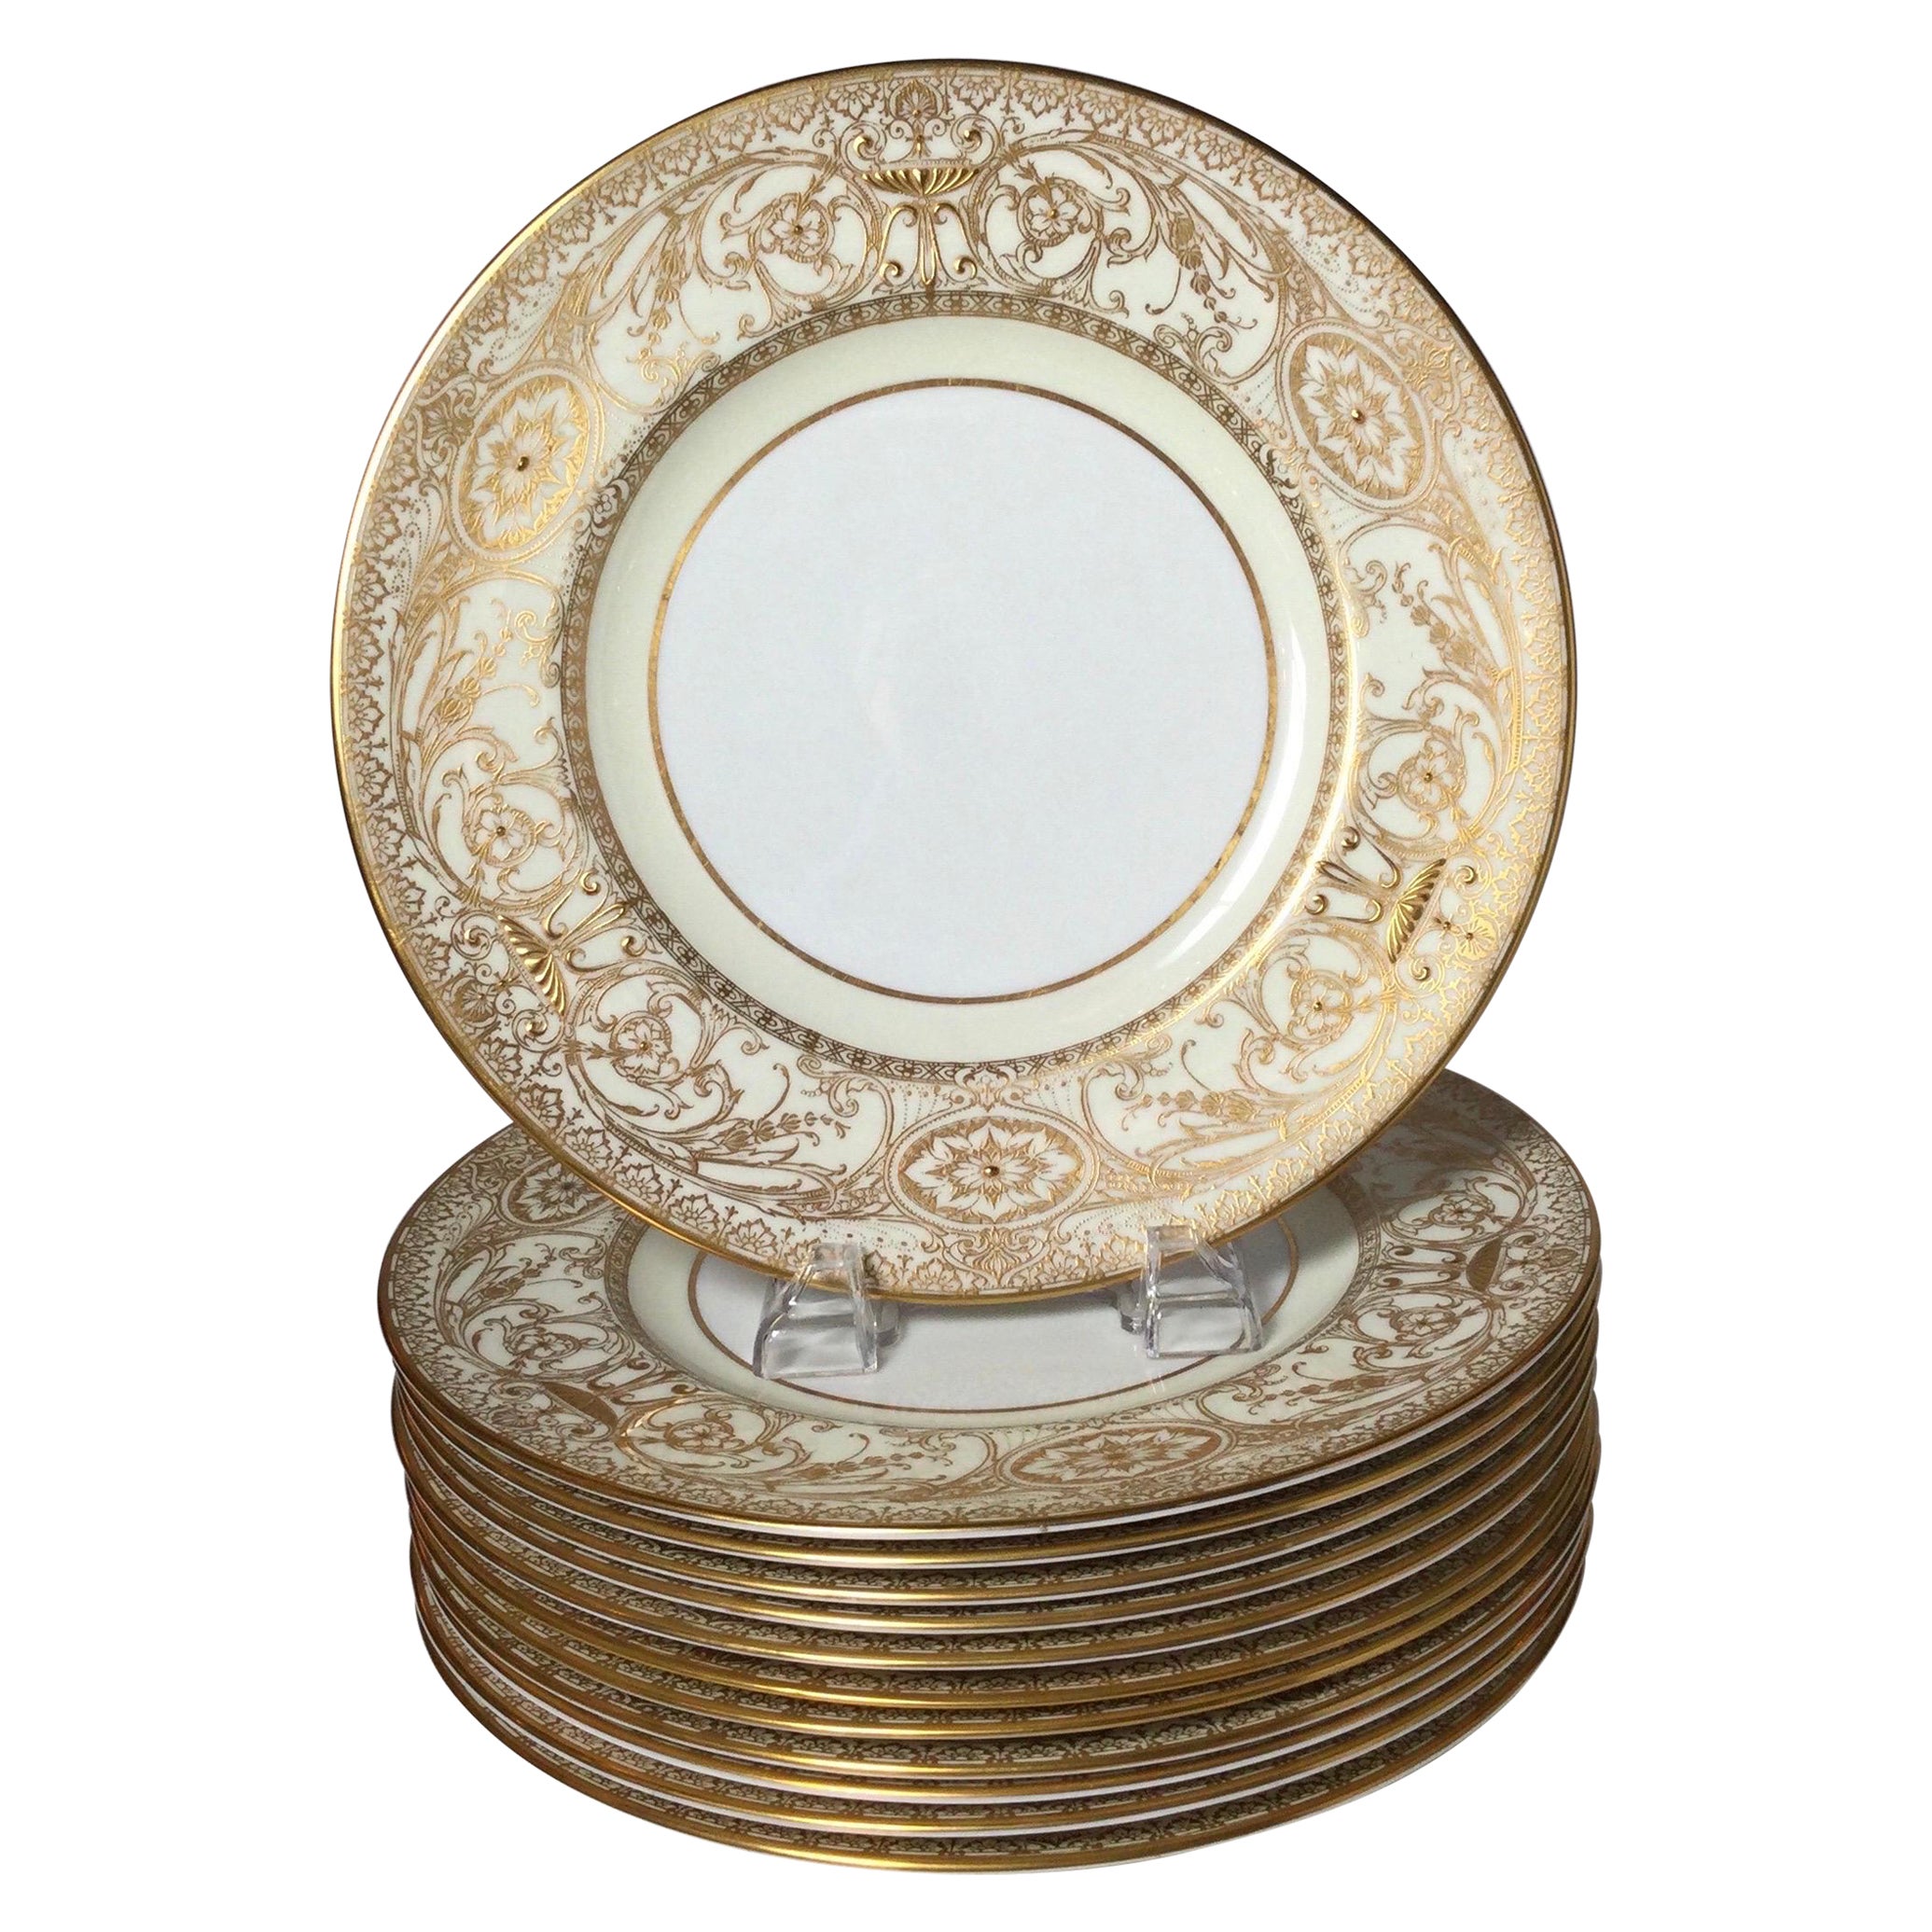 Set of 12 English Raised Gilt Porcelain Dinner Service Plates